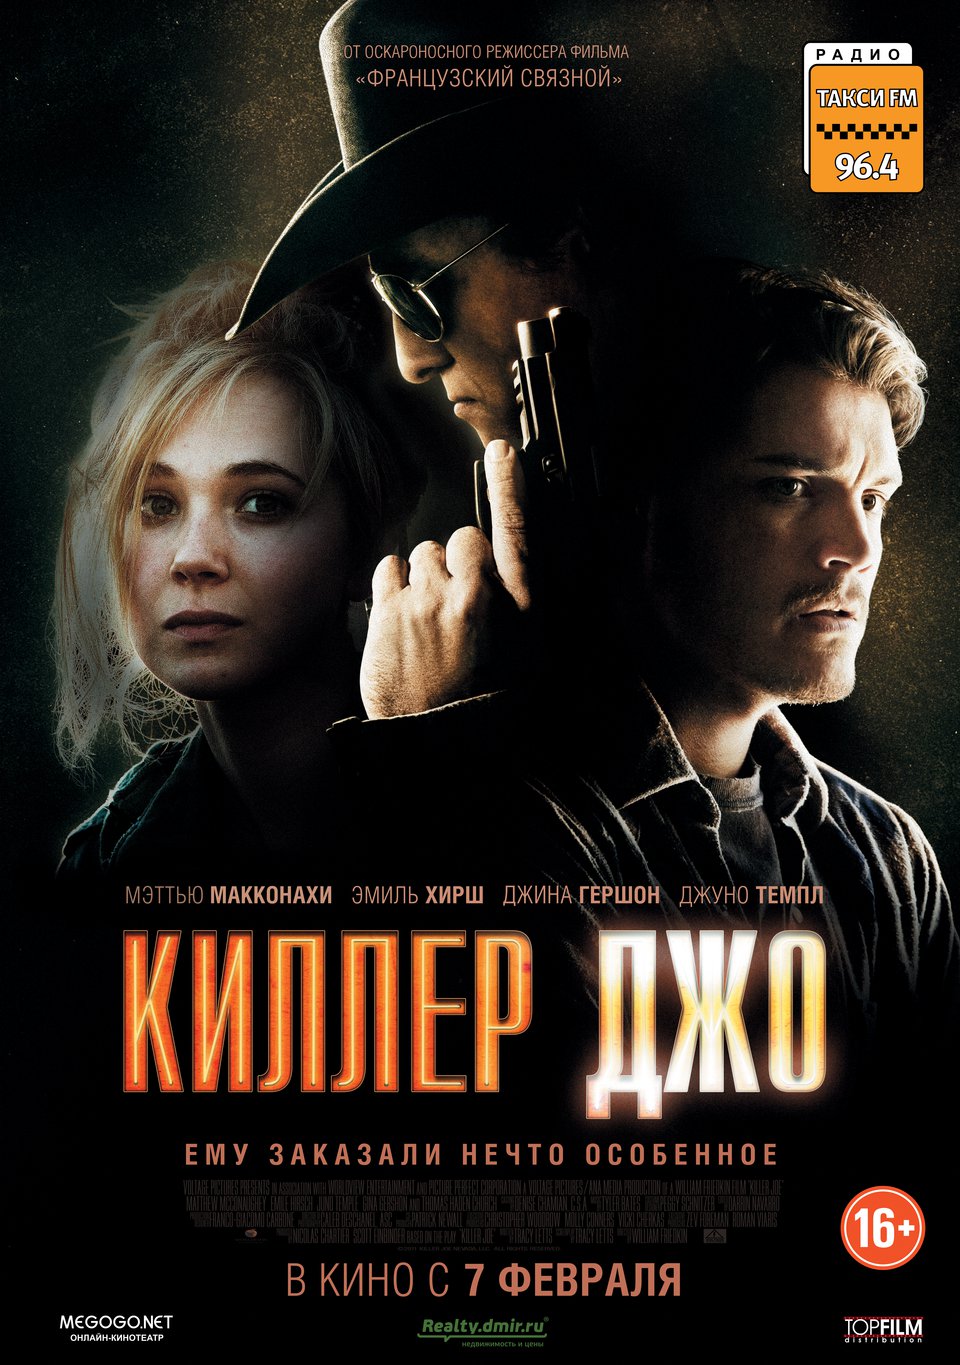 http://s1.okino.ua/films/i/8/7/1/okino.ua-killer-joe-562871-a.jpg